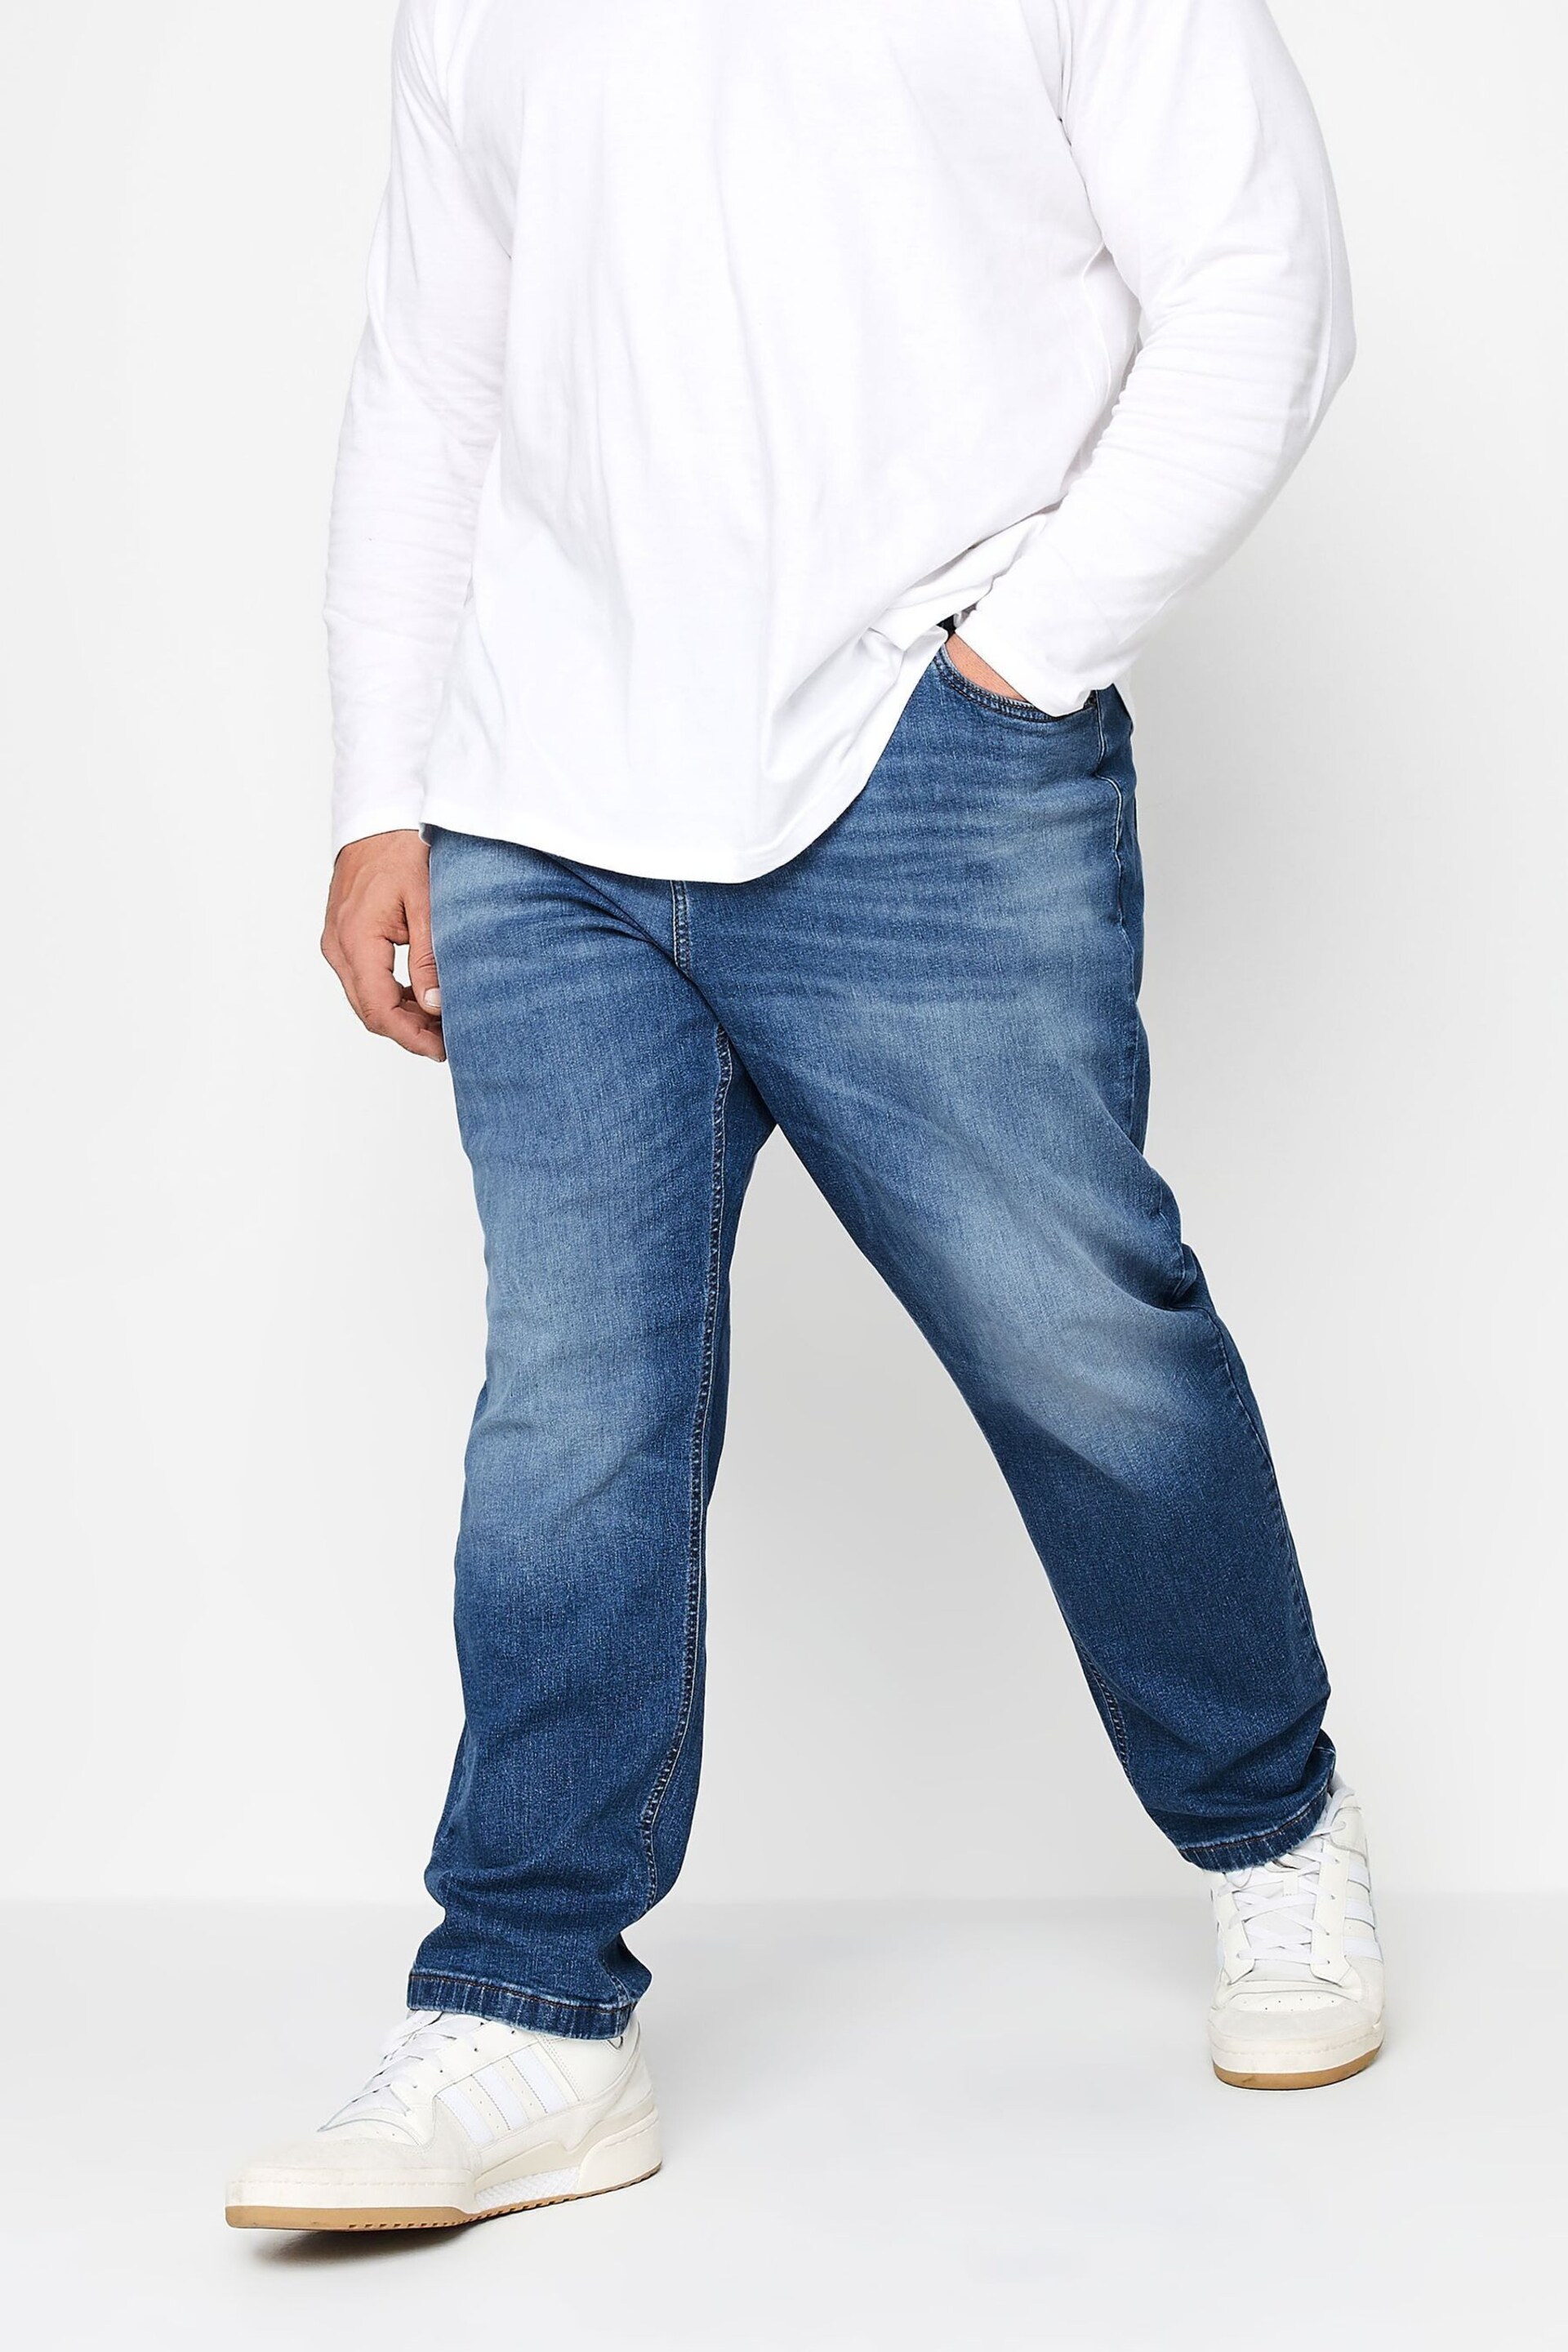 BadRhino Big & Tall Blue Washed Denim Jeans - Image 1 of 4